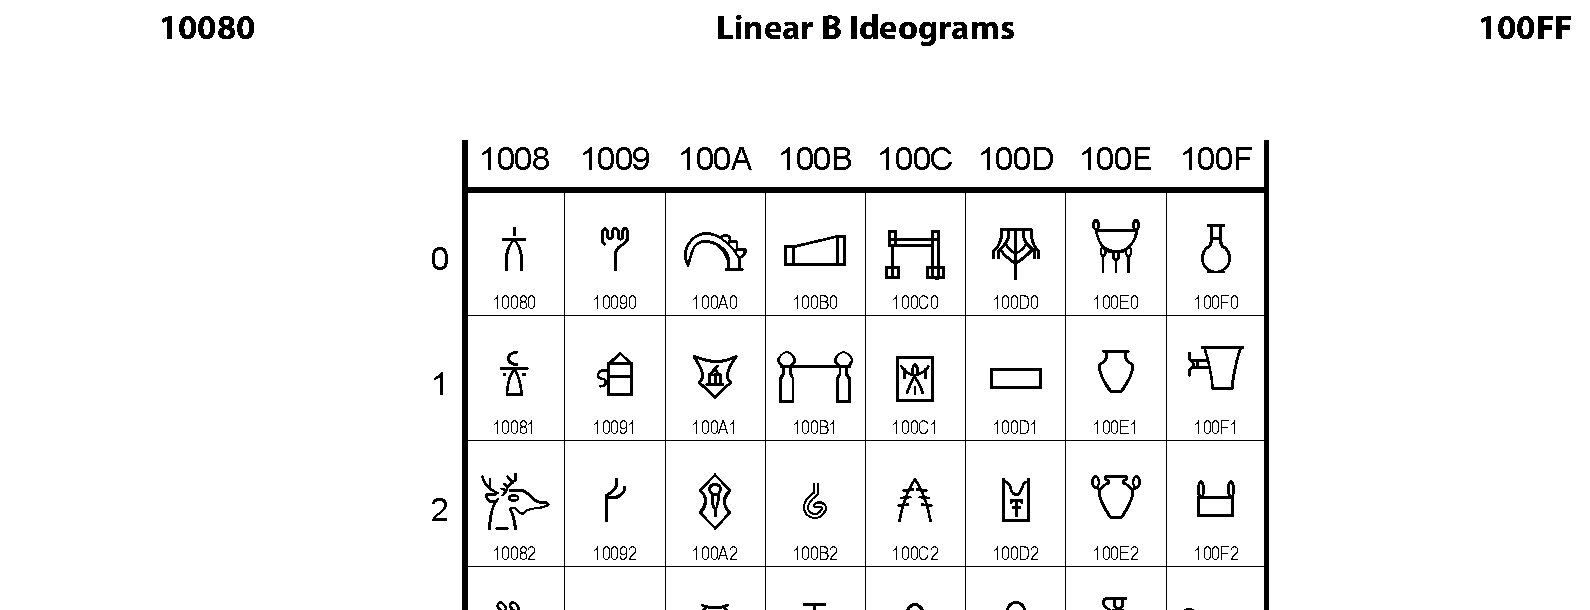 Unicode - Linear B Ideograms